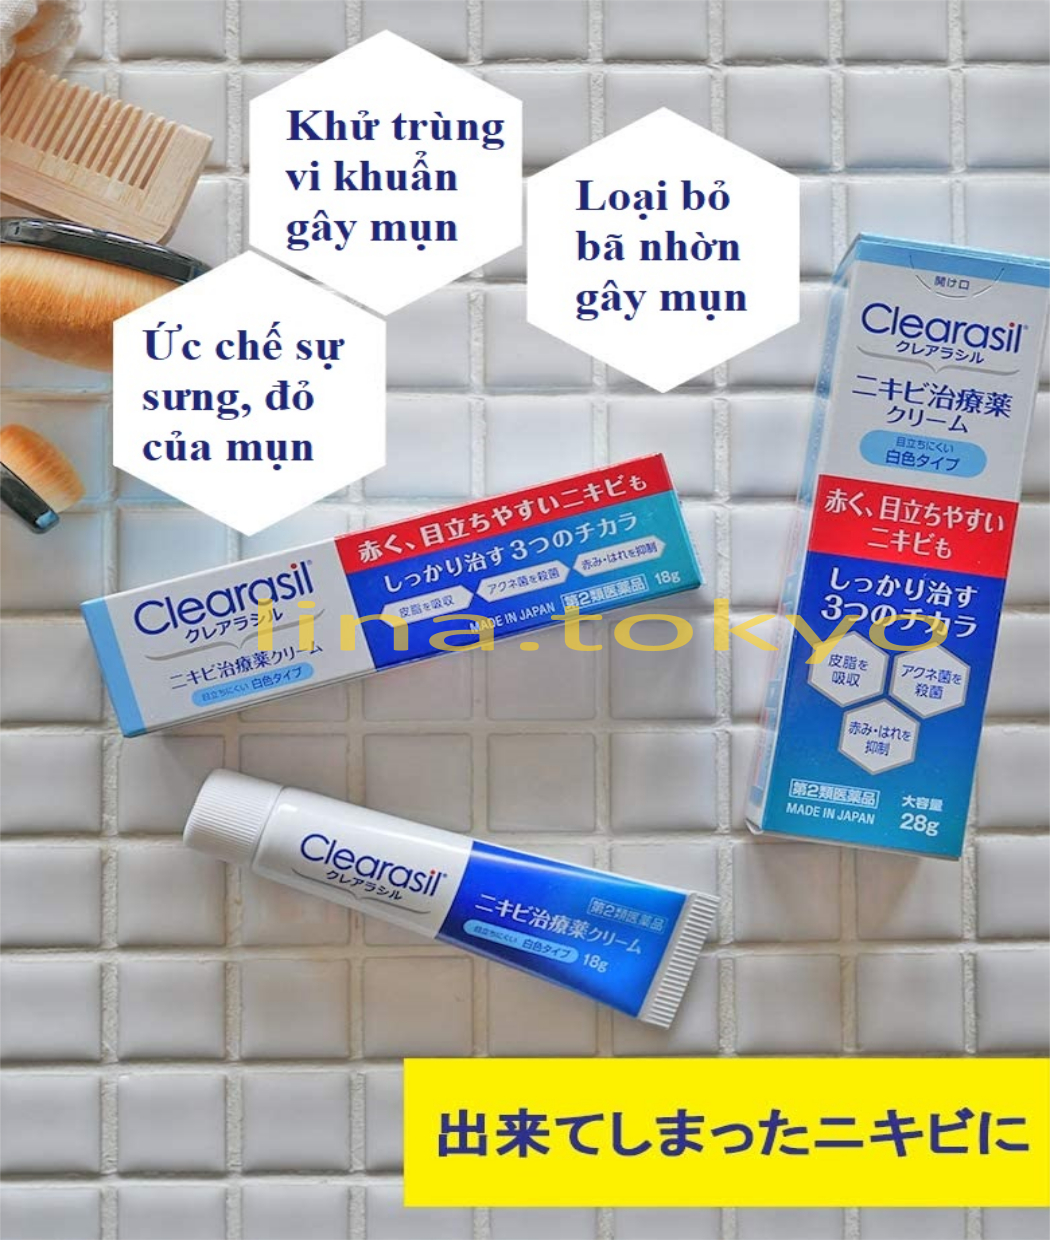 Clearasil Ance cream 4